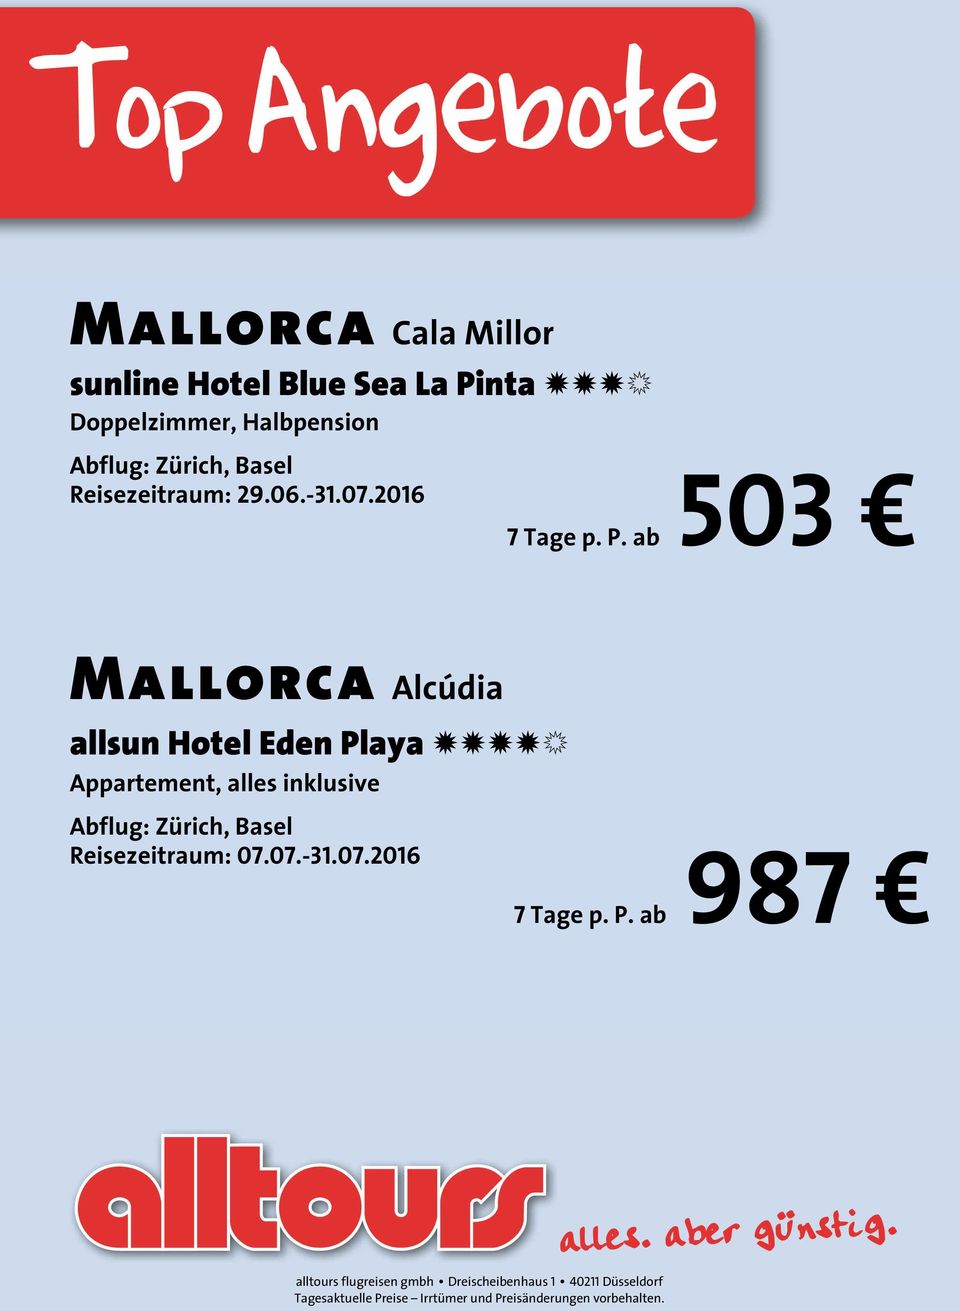 ab 503 Mallorca Alcúdia allsun Hotel Eden Playa NNNNn Appartement,